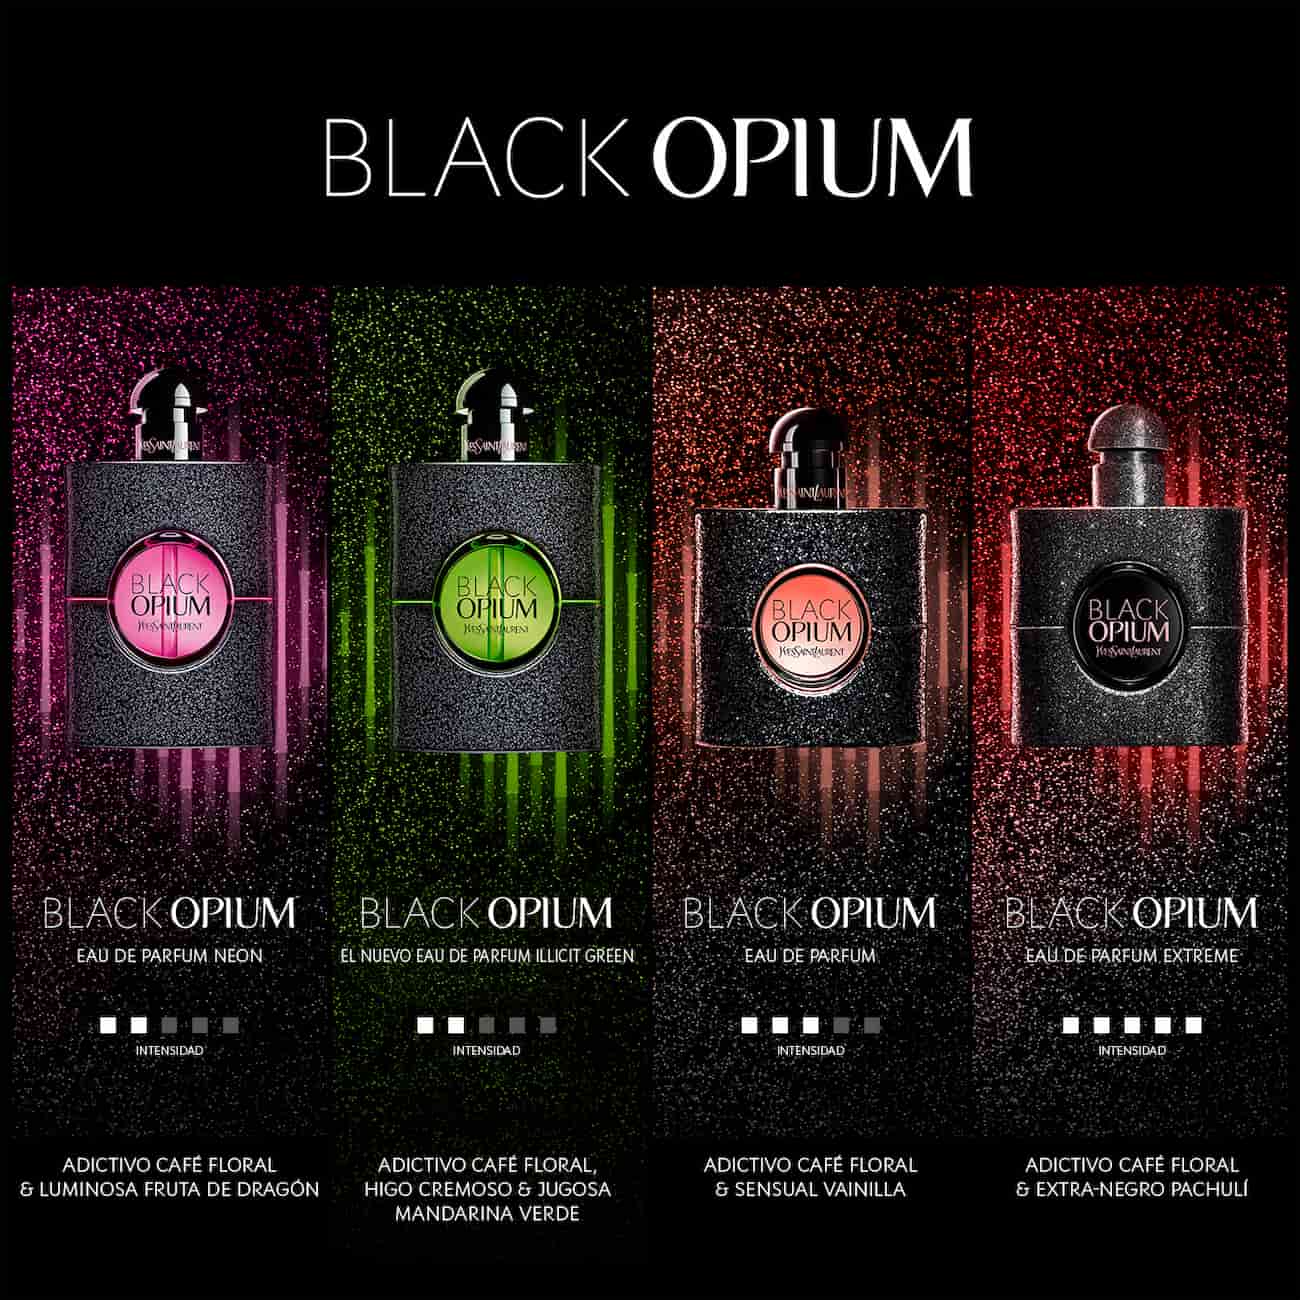 Black Opium en sus 4 versiones